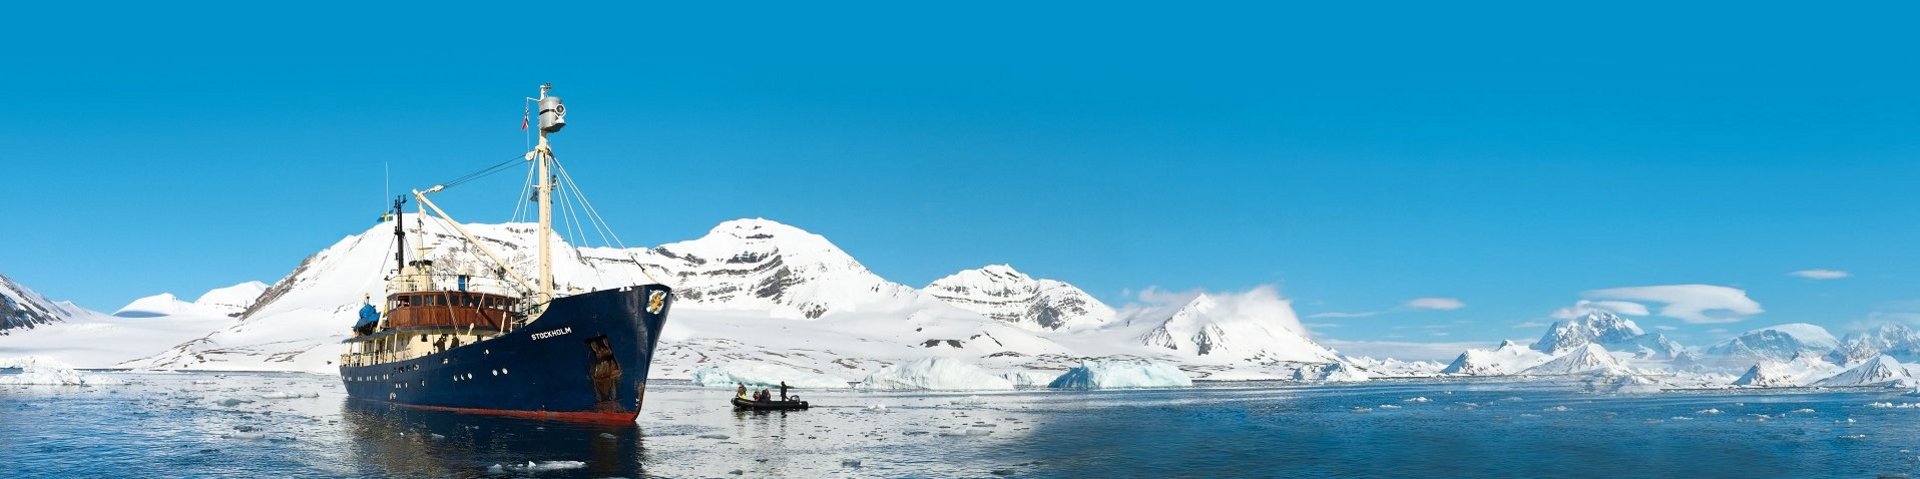 Wunderbare Landschaften in Spitzbergen